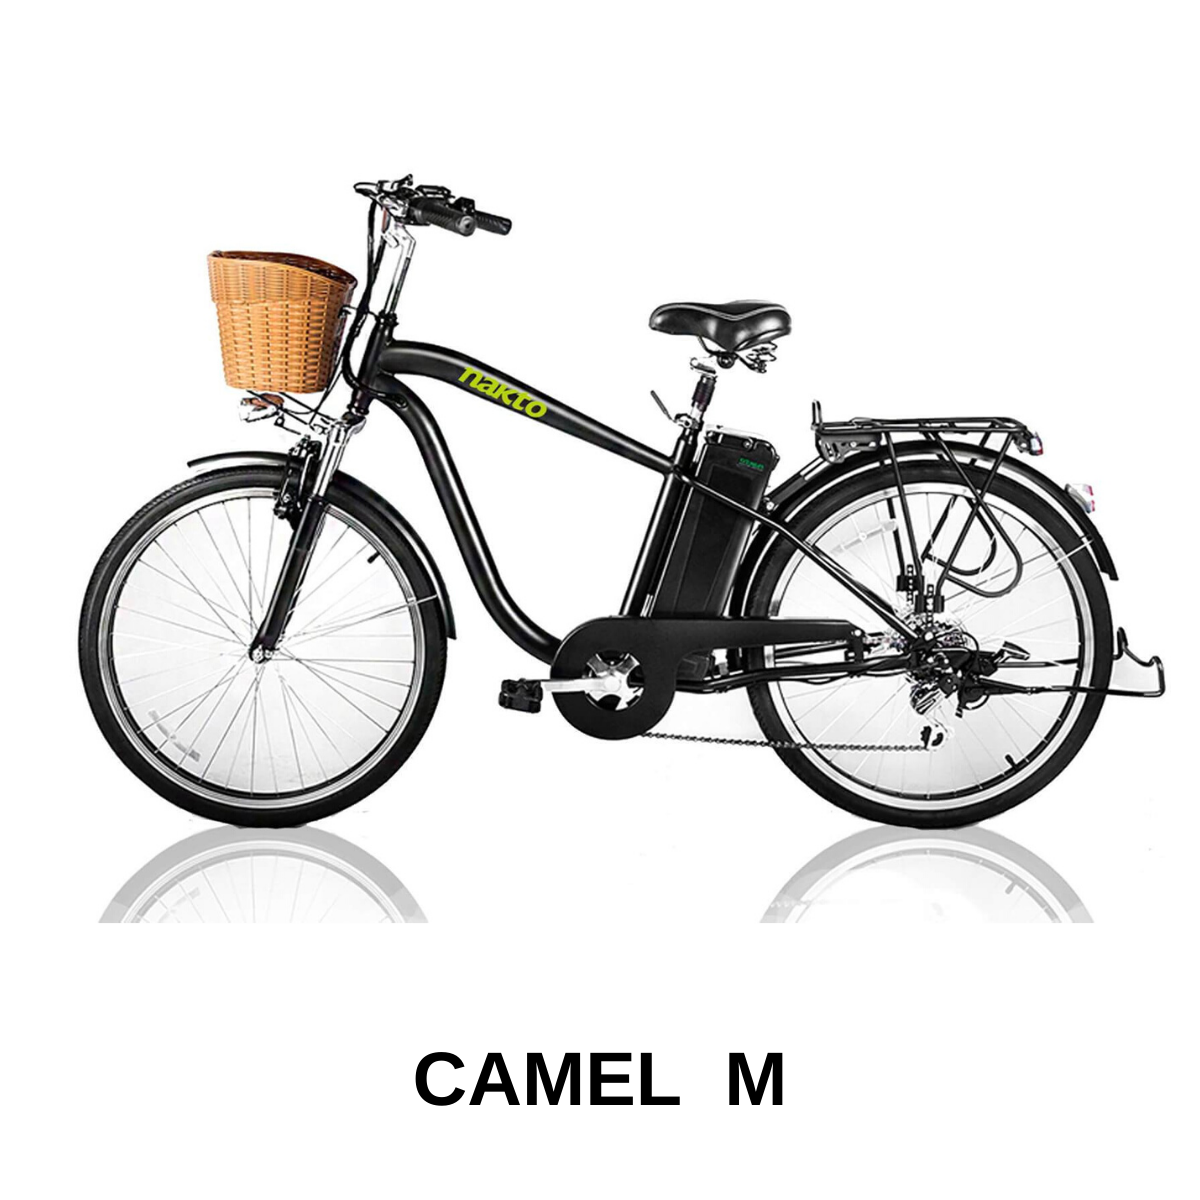 The Camel M by Nakto Bikes - Large Men's eBike